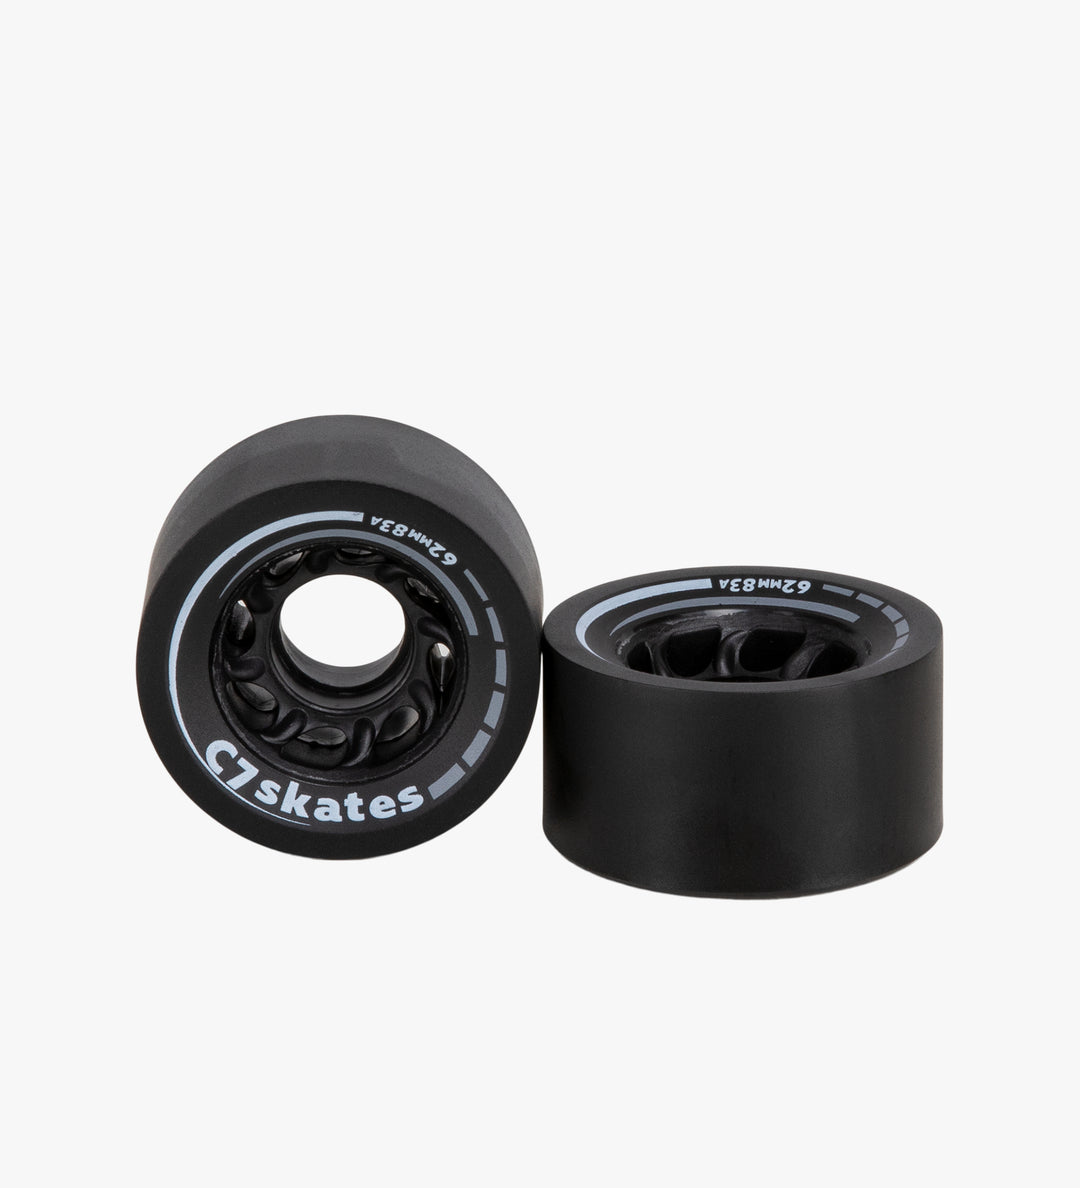 C7skates Femme Fatale Black 62mm roller skate wheels made from durable 83A polyurethane 